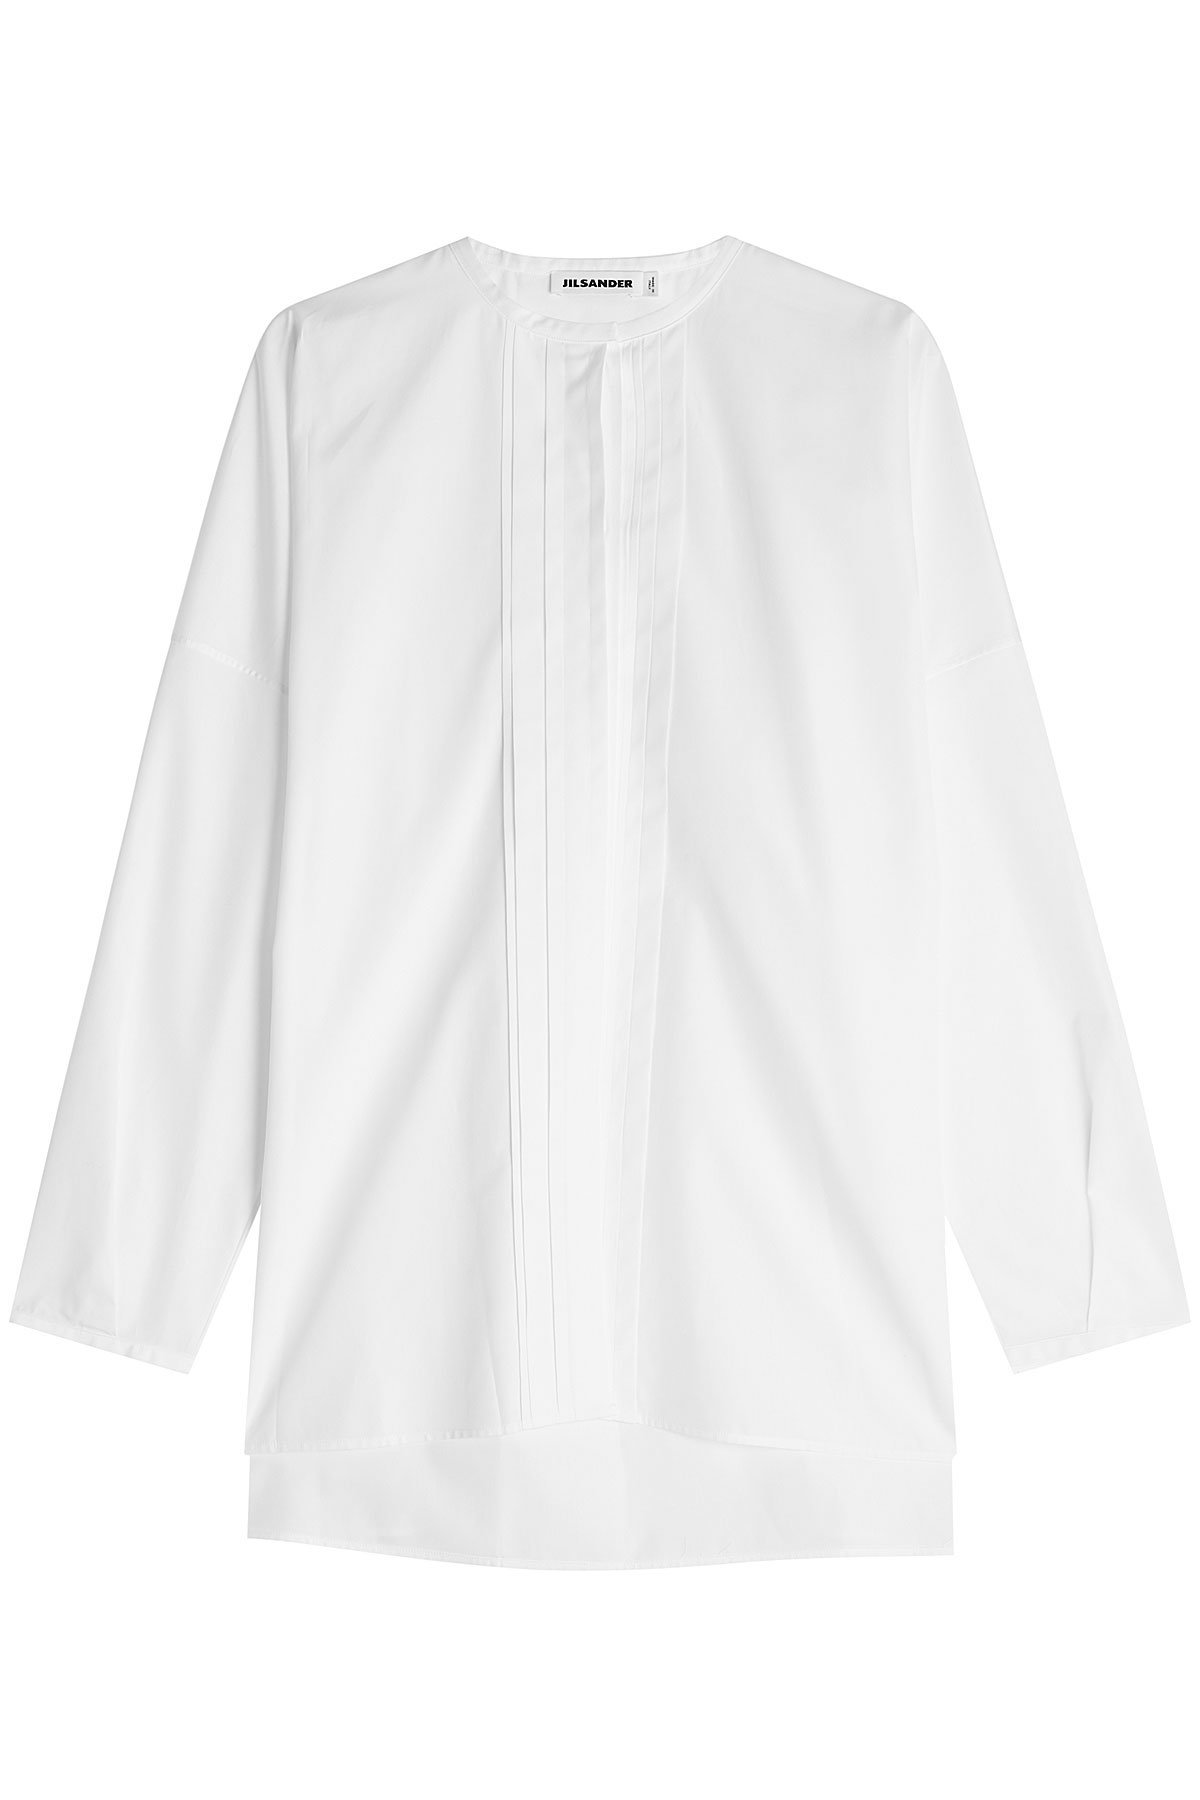 Jil Sander - Cotton Shirt with Pleats